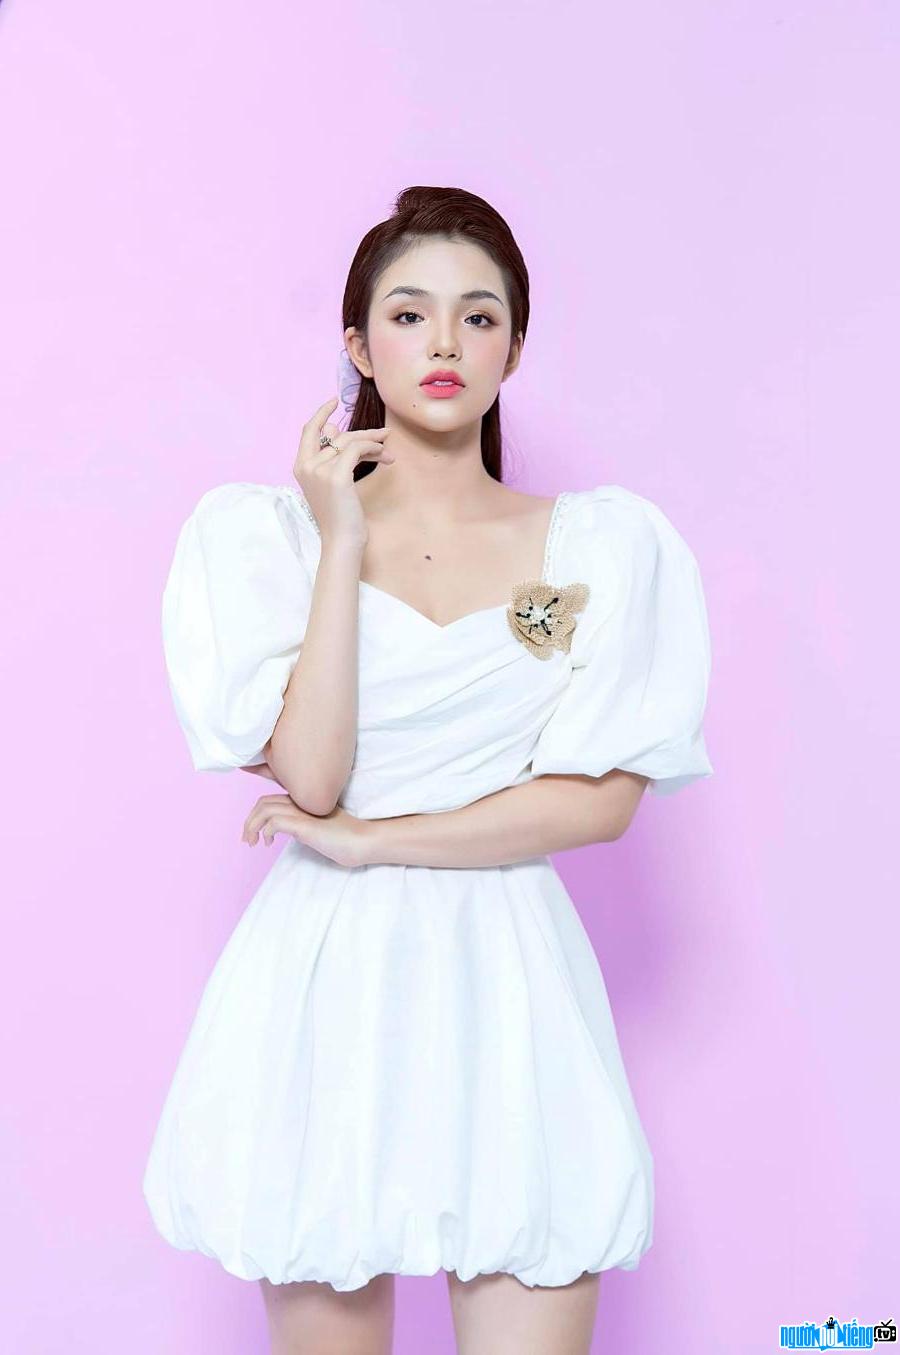 A photo of actress Yeye Nhat Ha